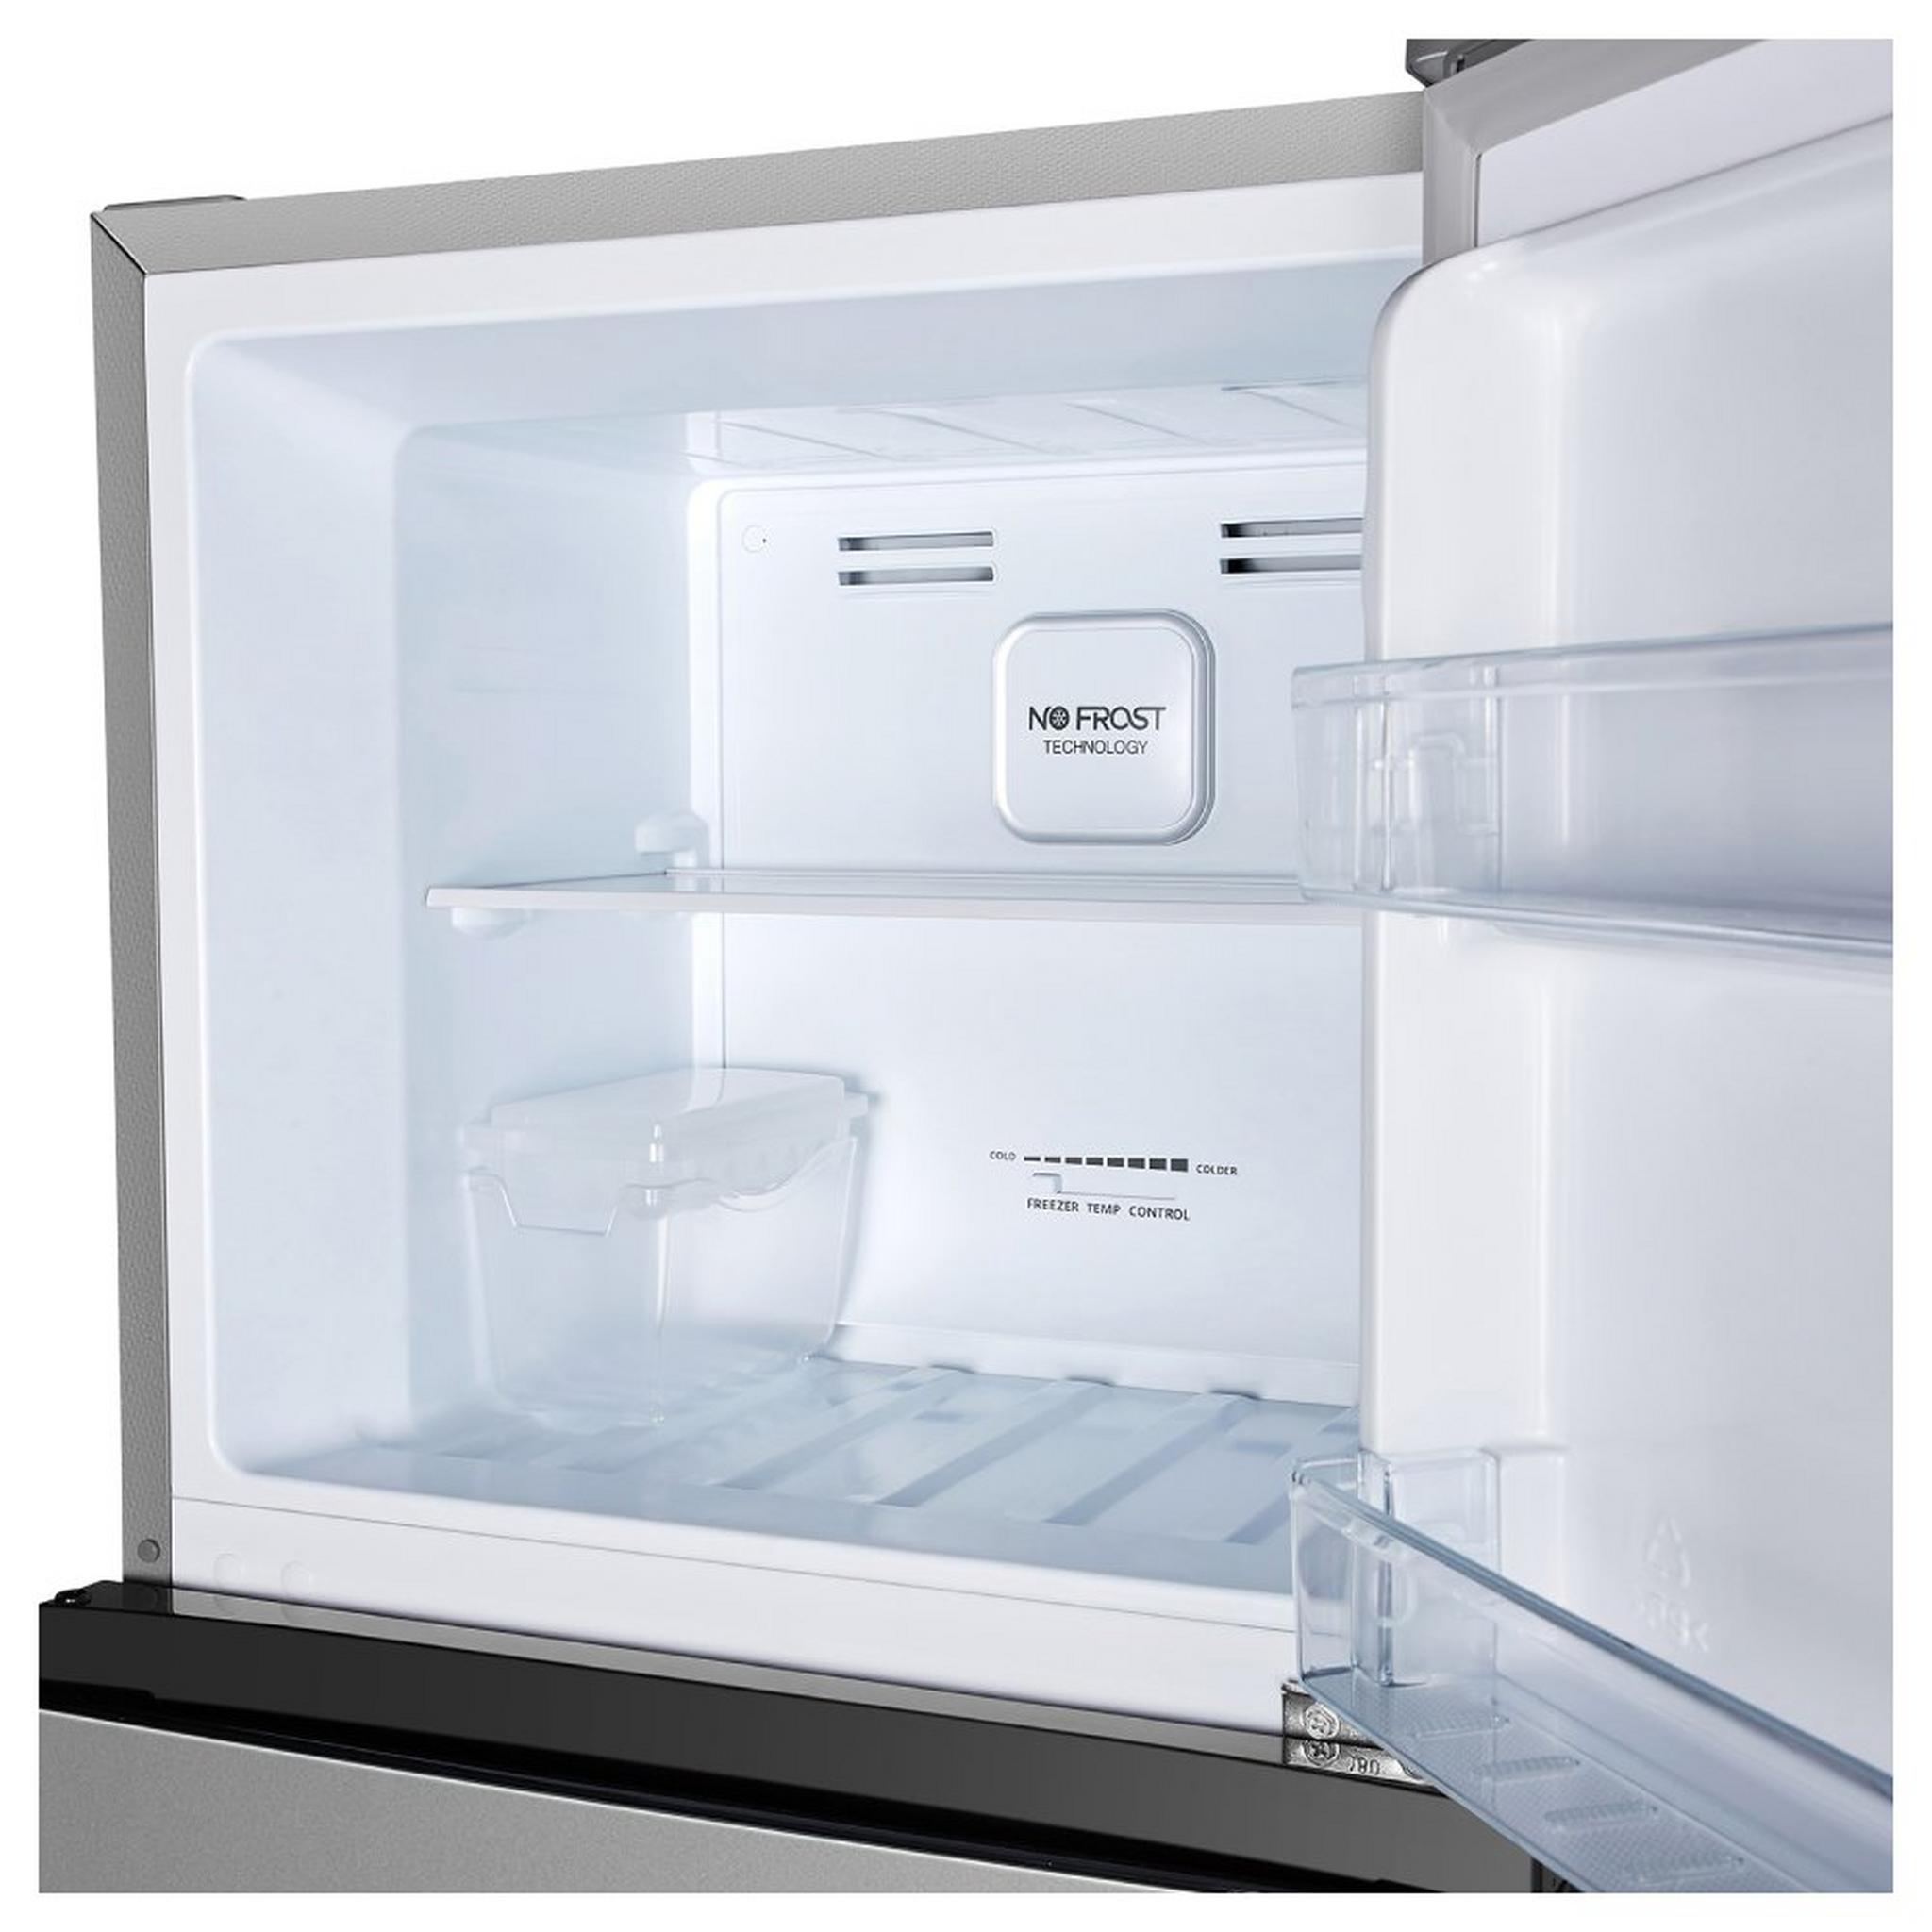 HISENSE Top Freezer Refrigerator, 9.3 CFT, 264 Liters, RT264N4DGN – Silver